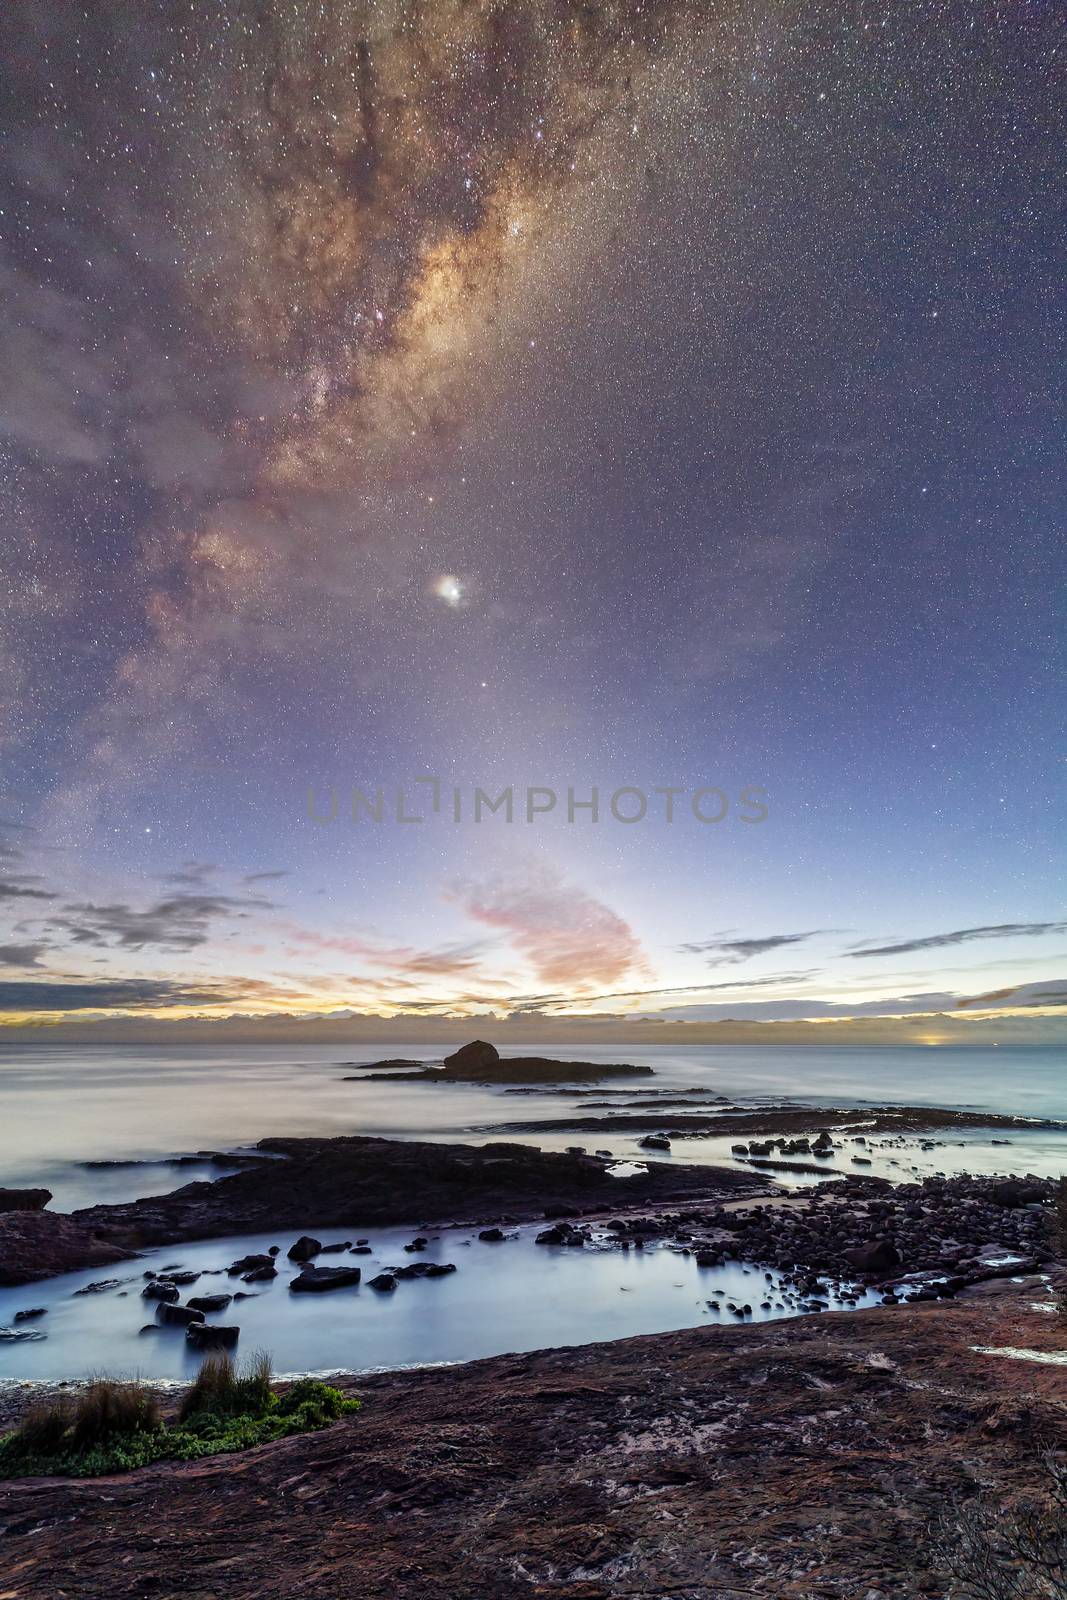 Starry night sky just before sunrise of coastal landscape by lovleah